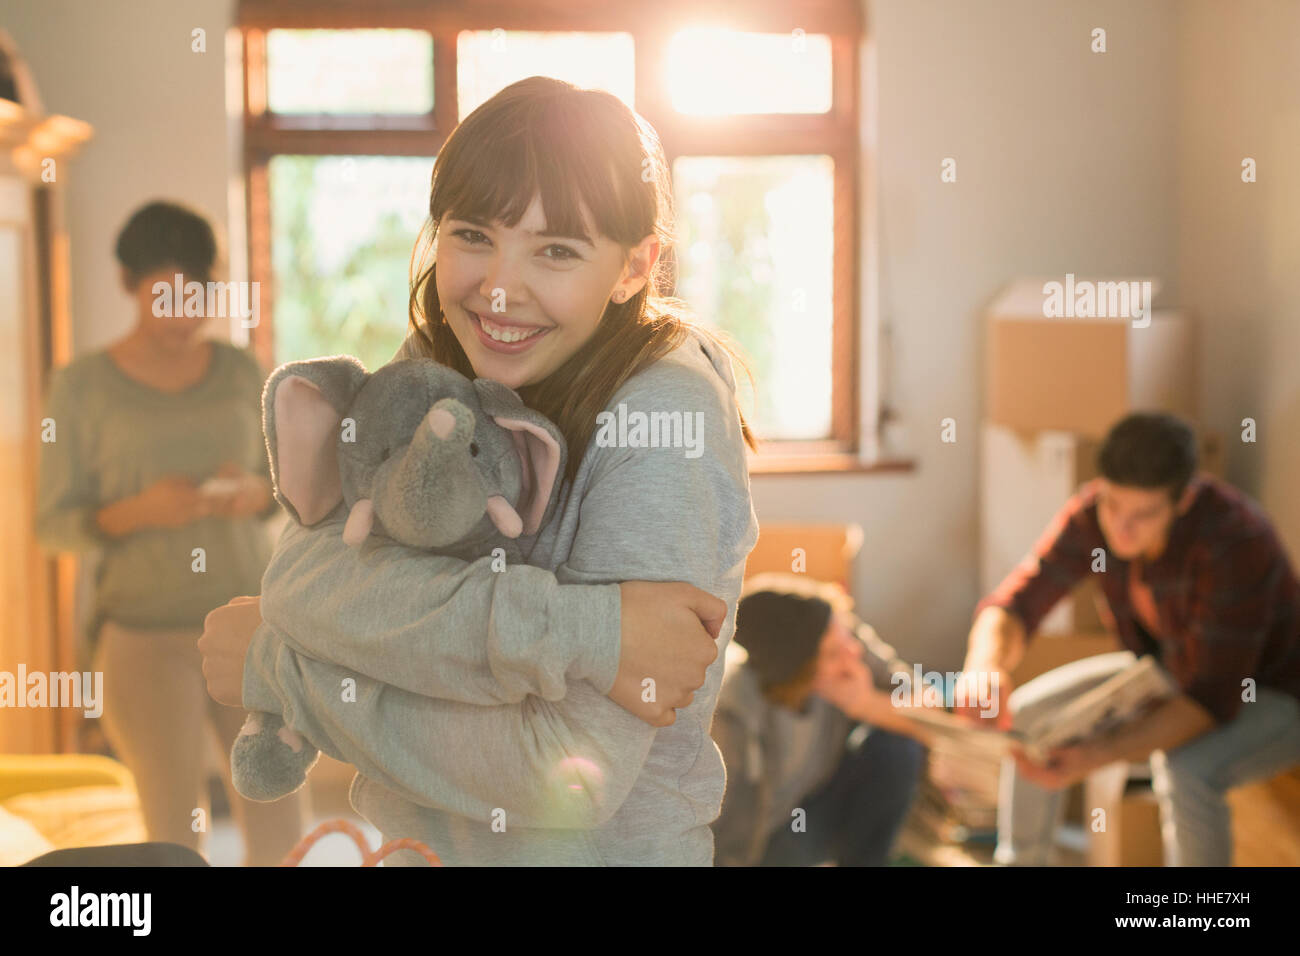 Portrait smiling young woman hugging stuffed elephant Stock Photo